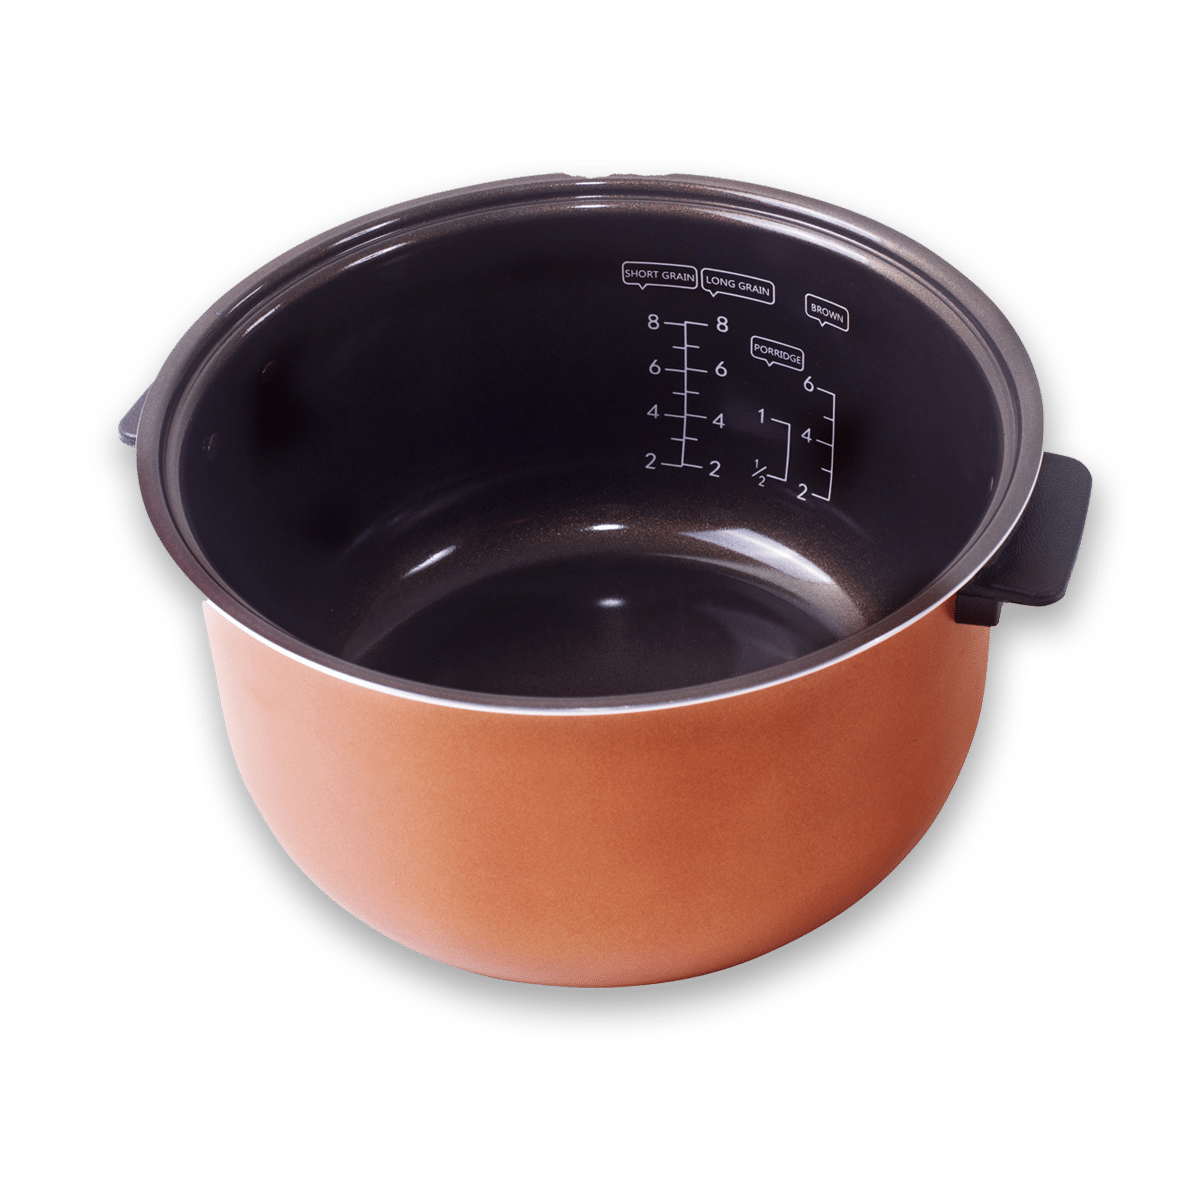 Sakura Rice Cooker 'Ninja' Ceramic Coated Inner Bowl - Yum Asia